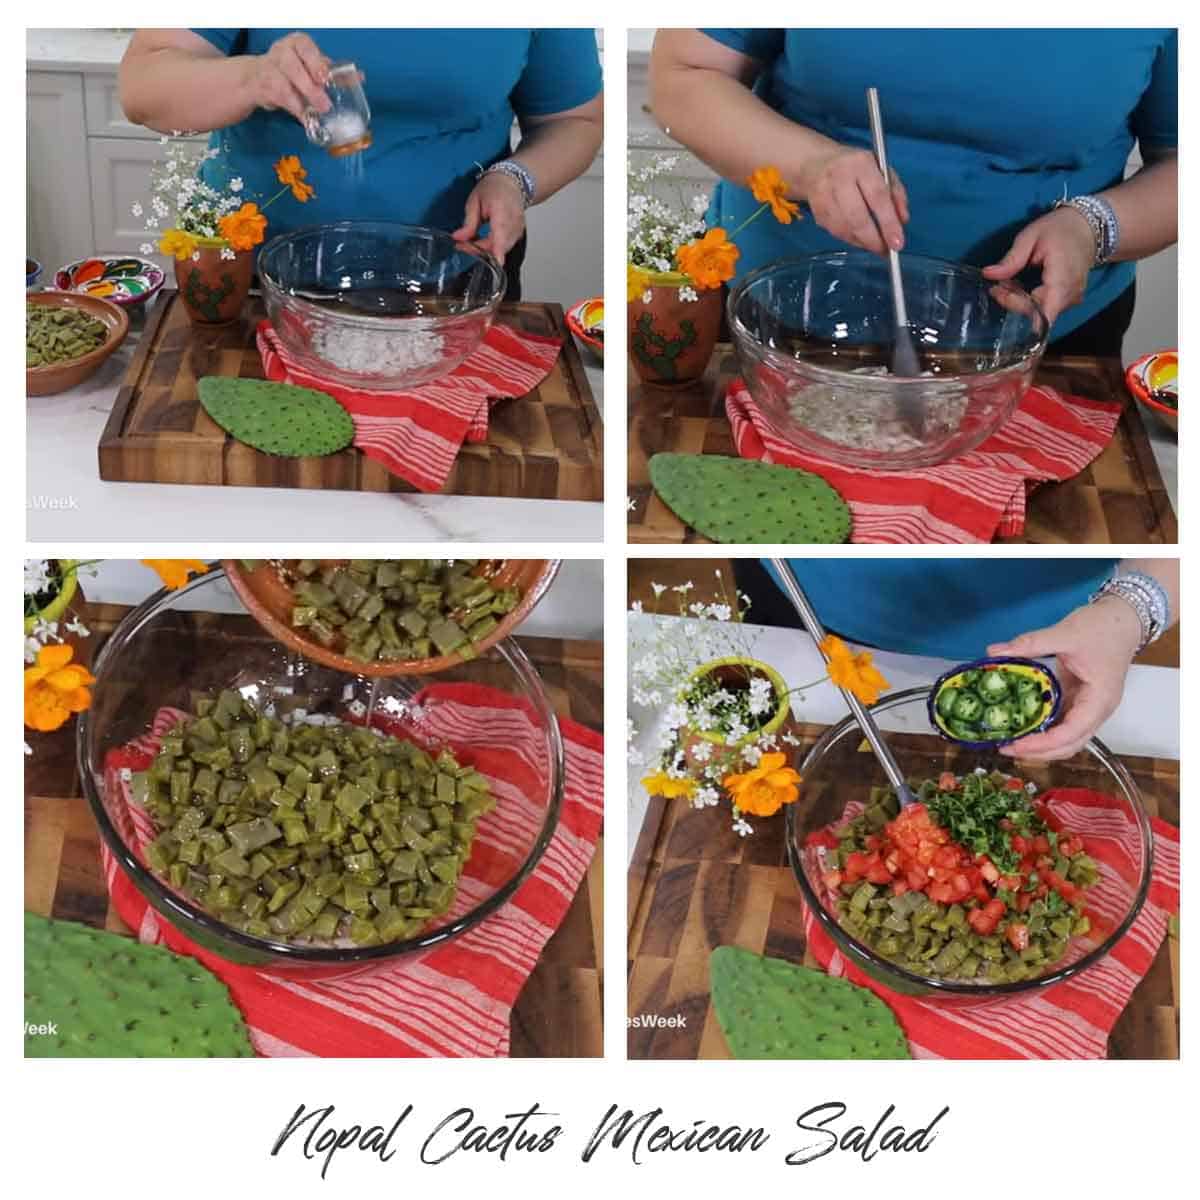 How to make nopales salad